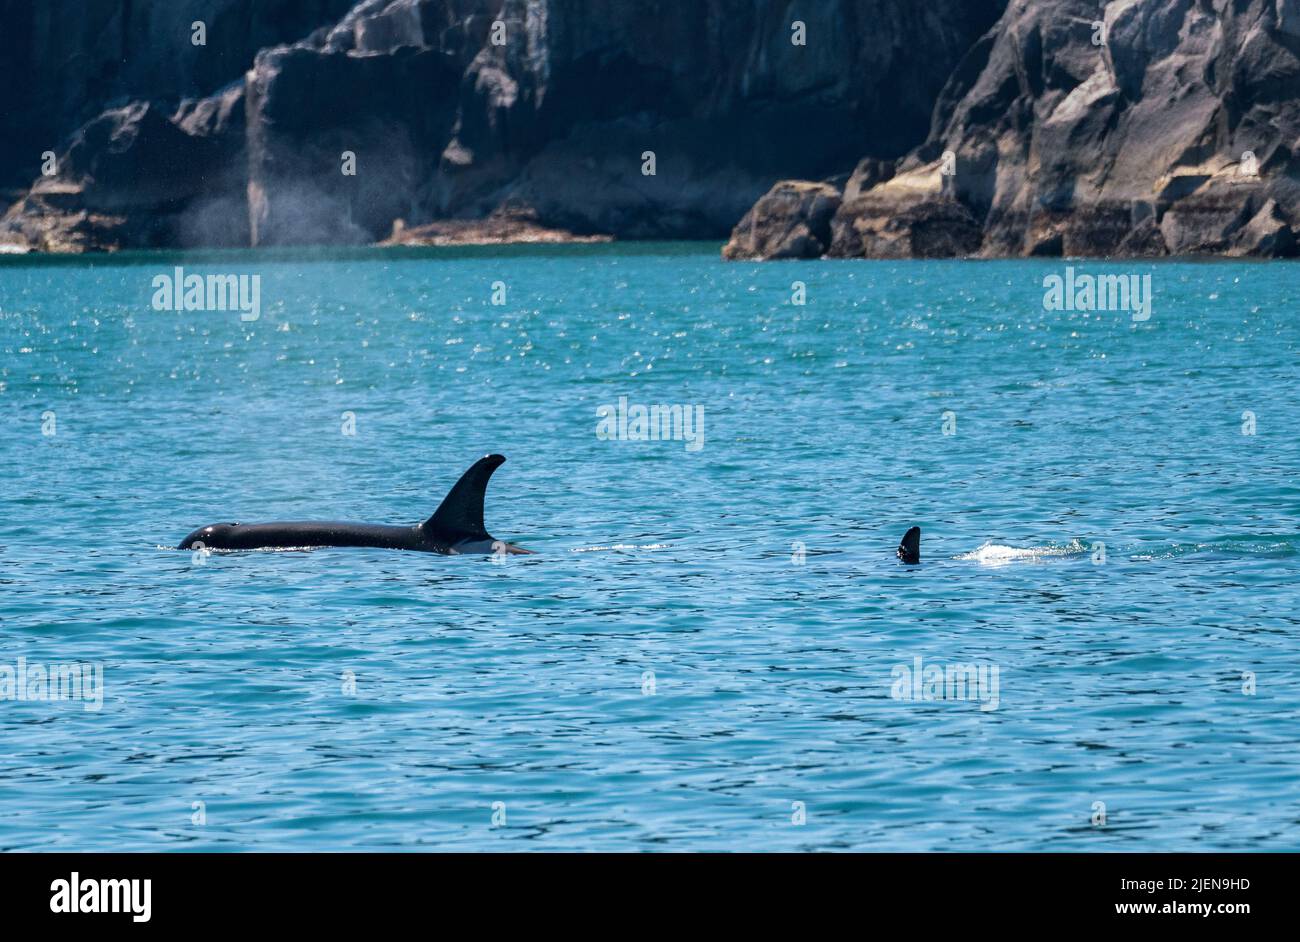 Dark fin of orca whale cutting through the water of Resurrection Bay Seward Alaska Stock Photo